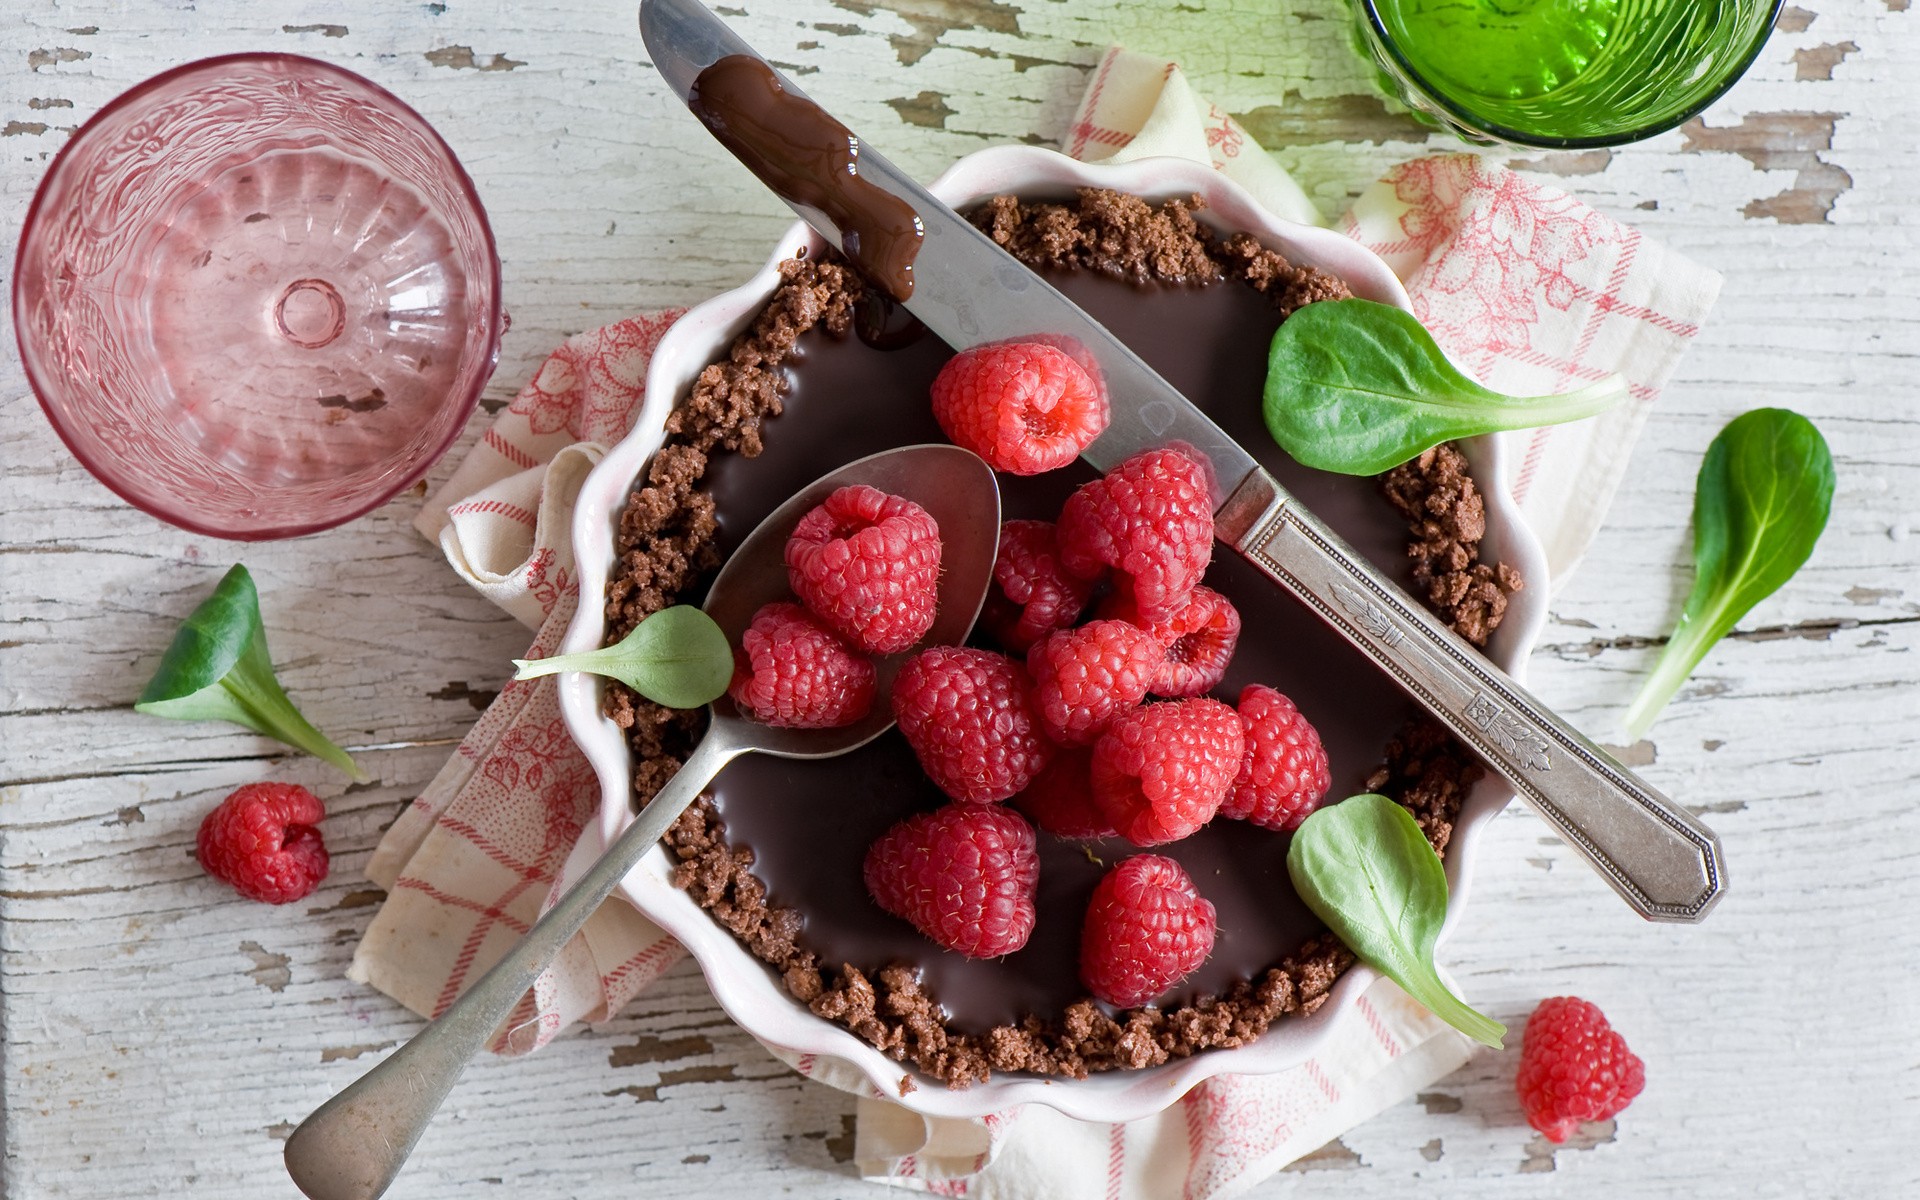 General 1920x1200 food lunch colorful aerial view dessert raspberries cutlery wooden surface berries knife spoon sweets